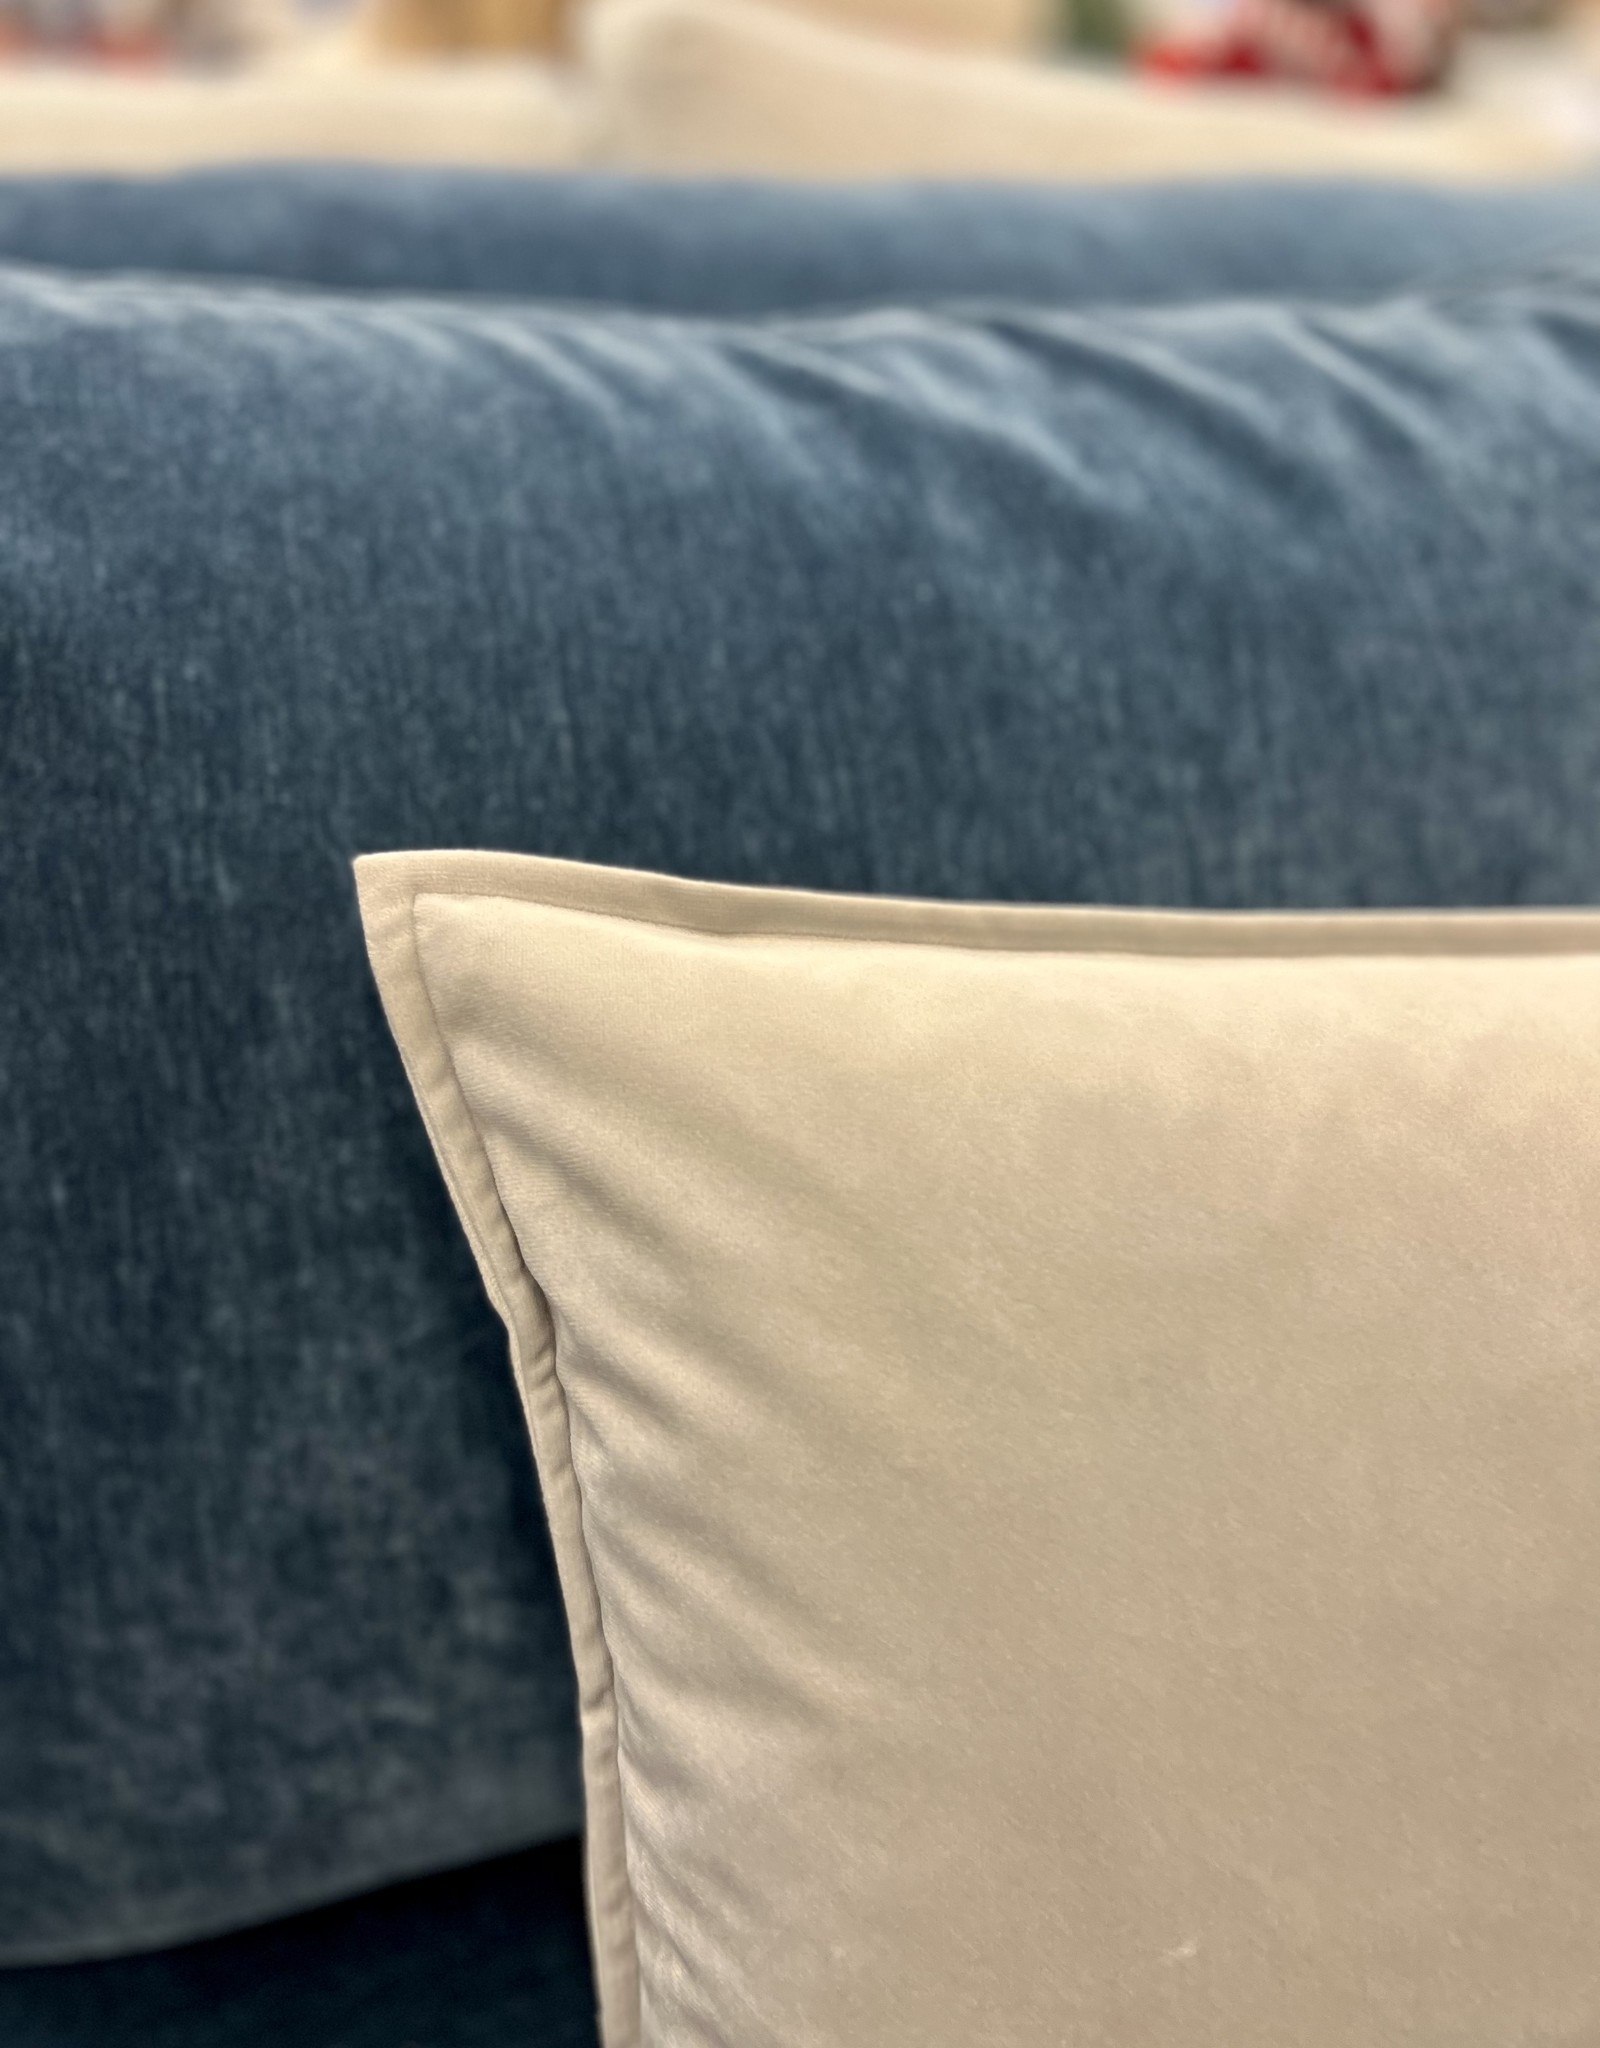 Daniadown Cushions Daniadown Dutch Velvet Silver Grey Deco 14 x22